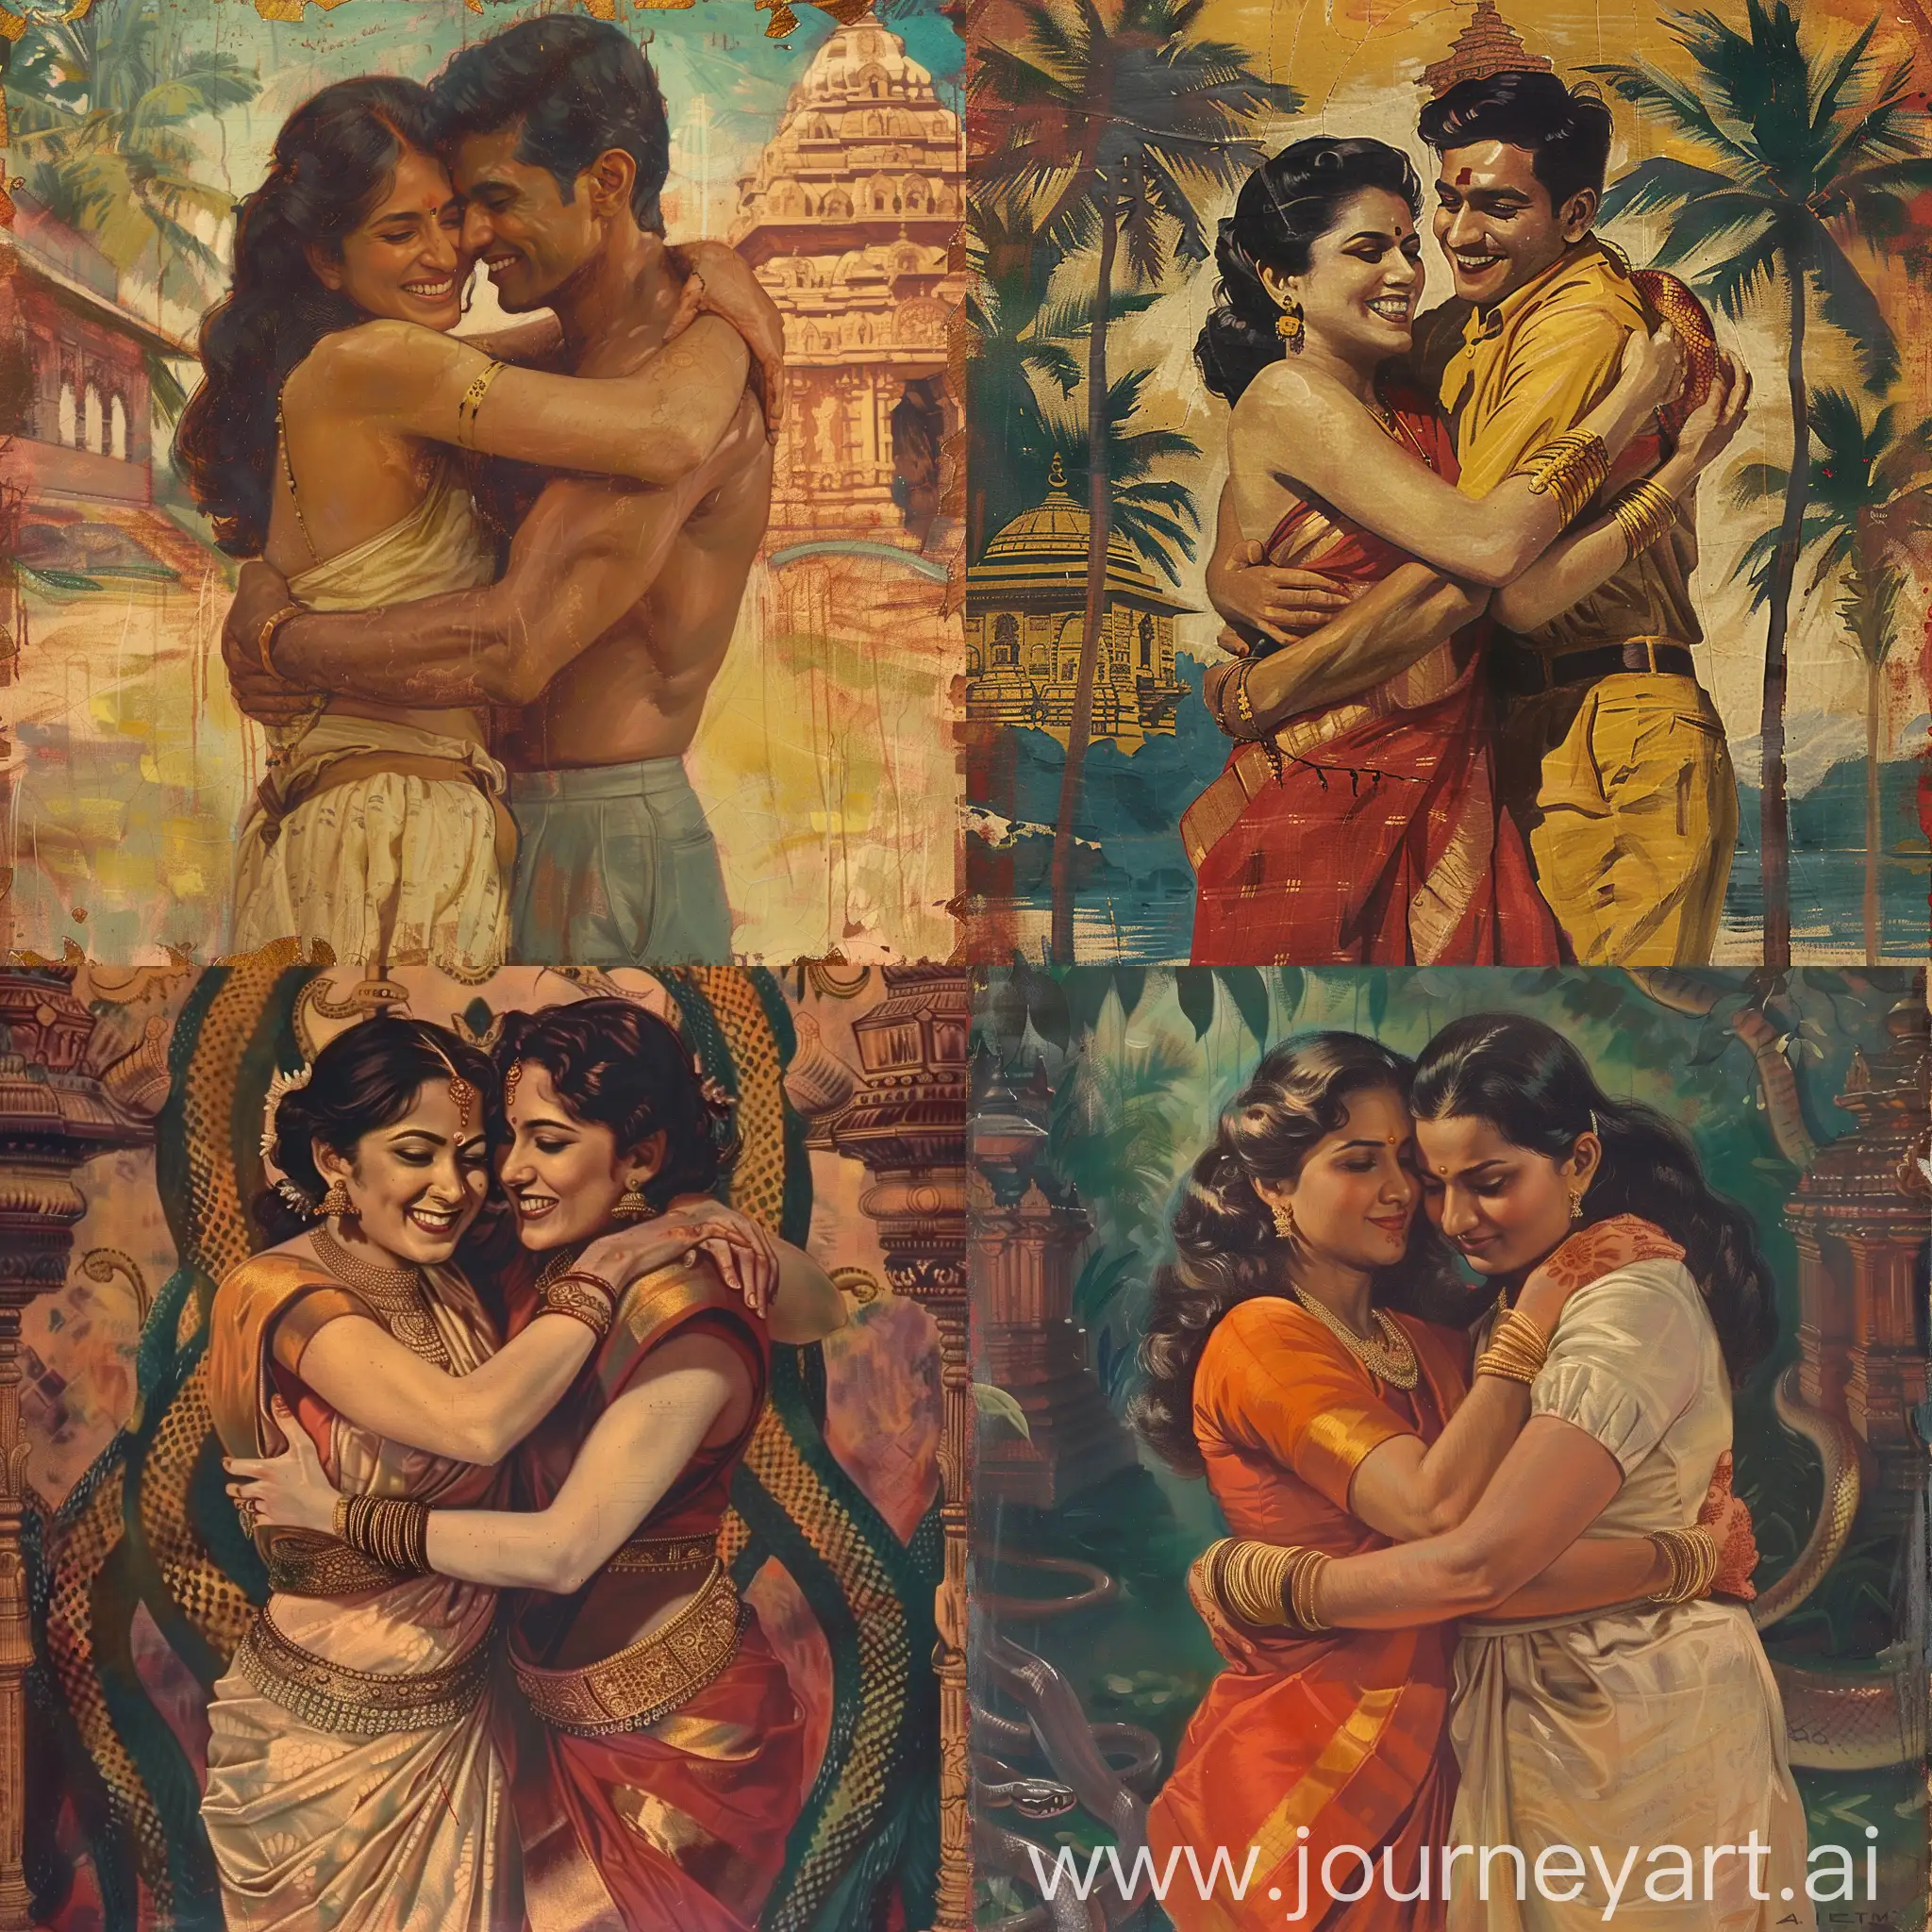 Vintage-Pulp-Art-Anupama-Parameshwaran-and-Anaswara-Rajan-Embrace-at-Snake-Temple-Kerala